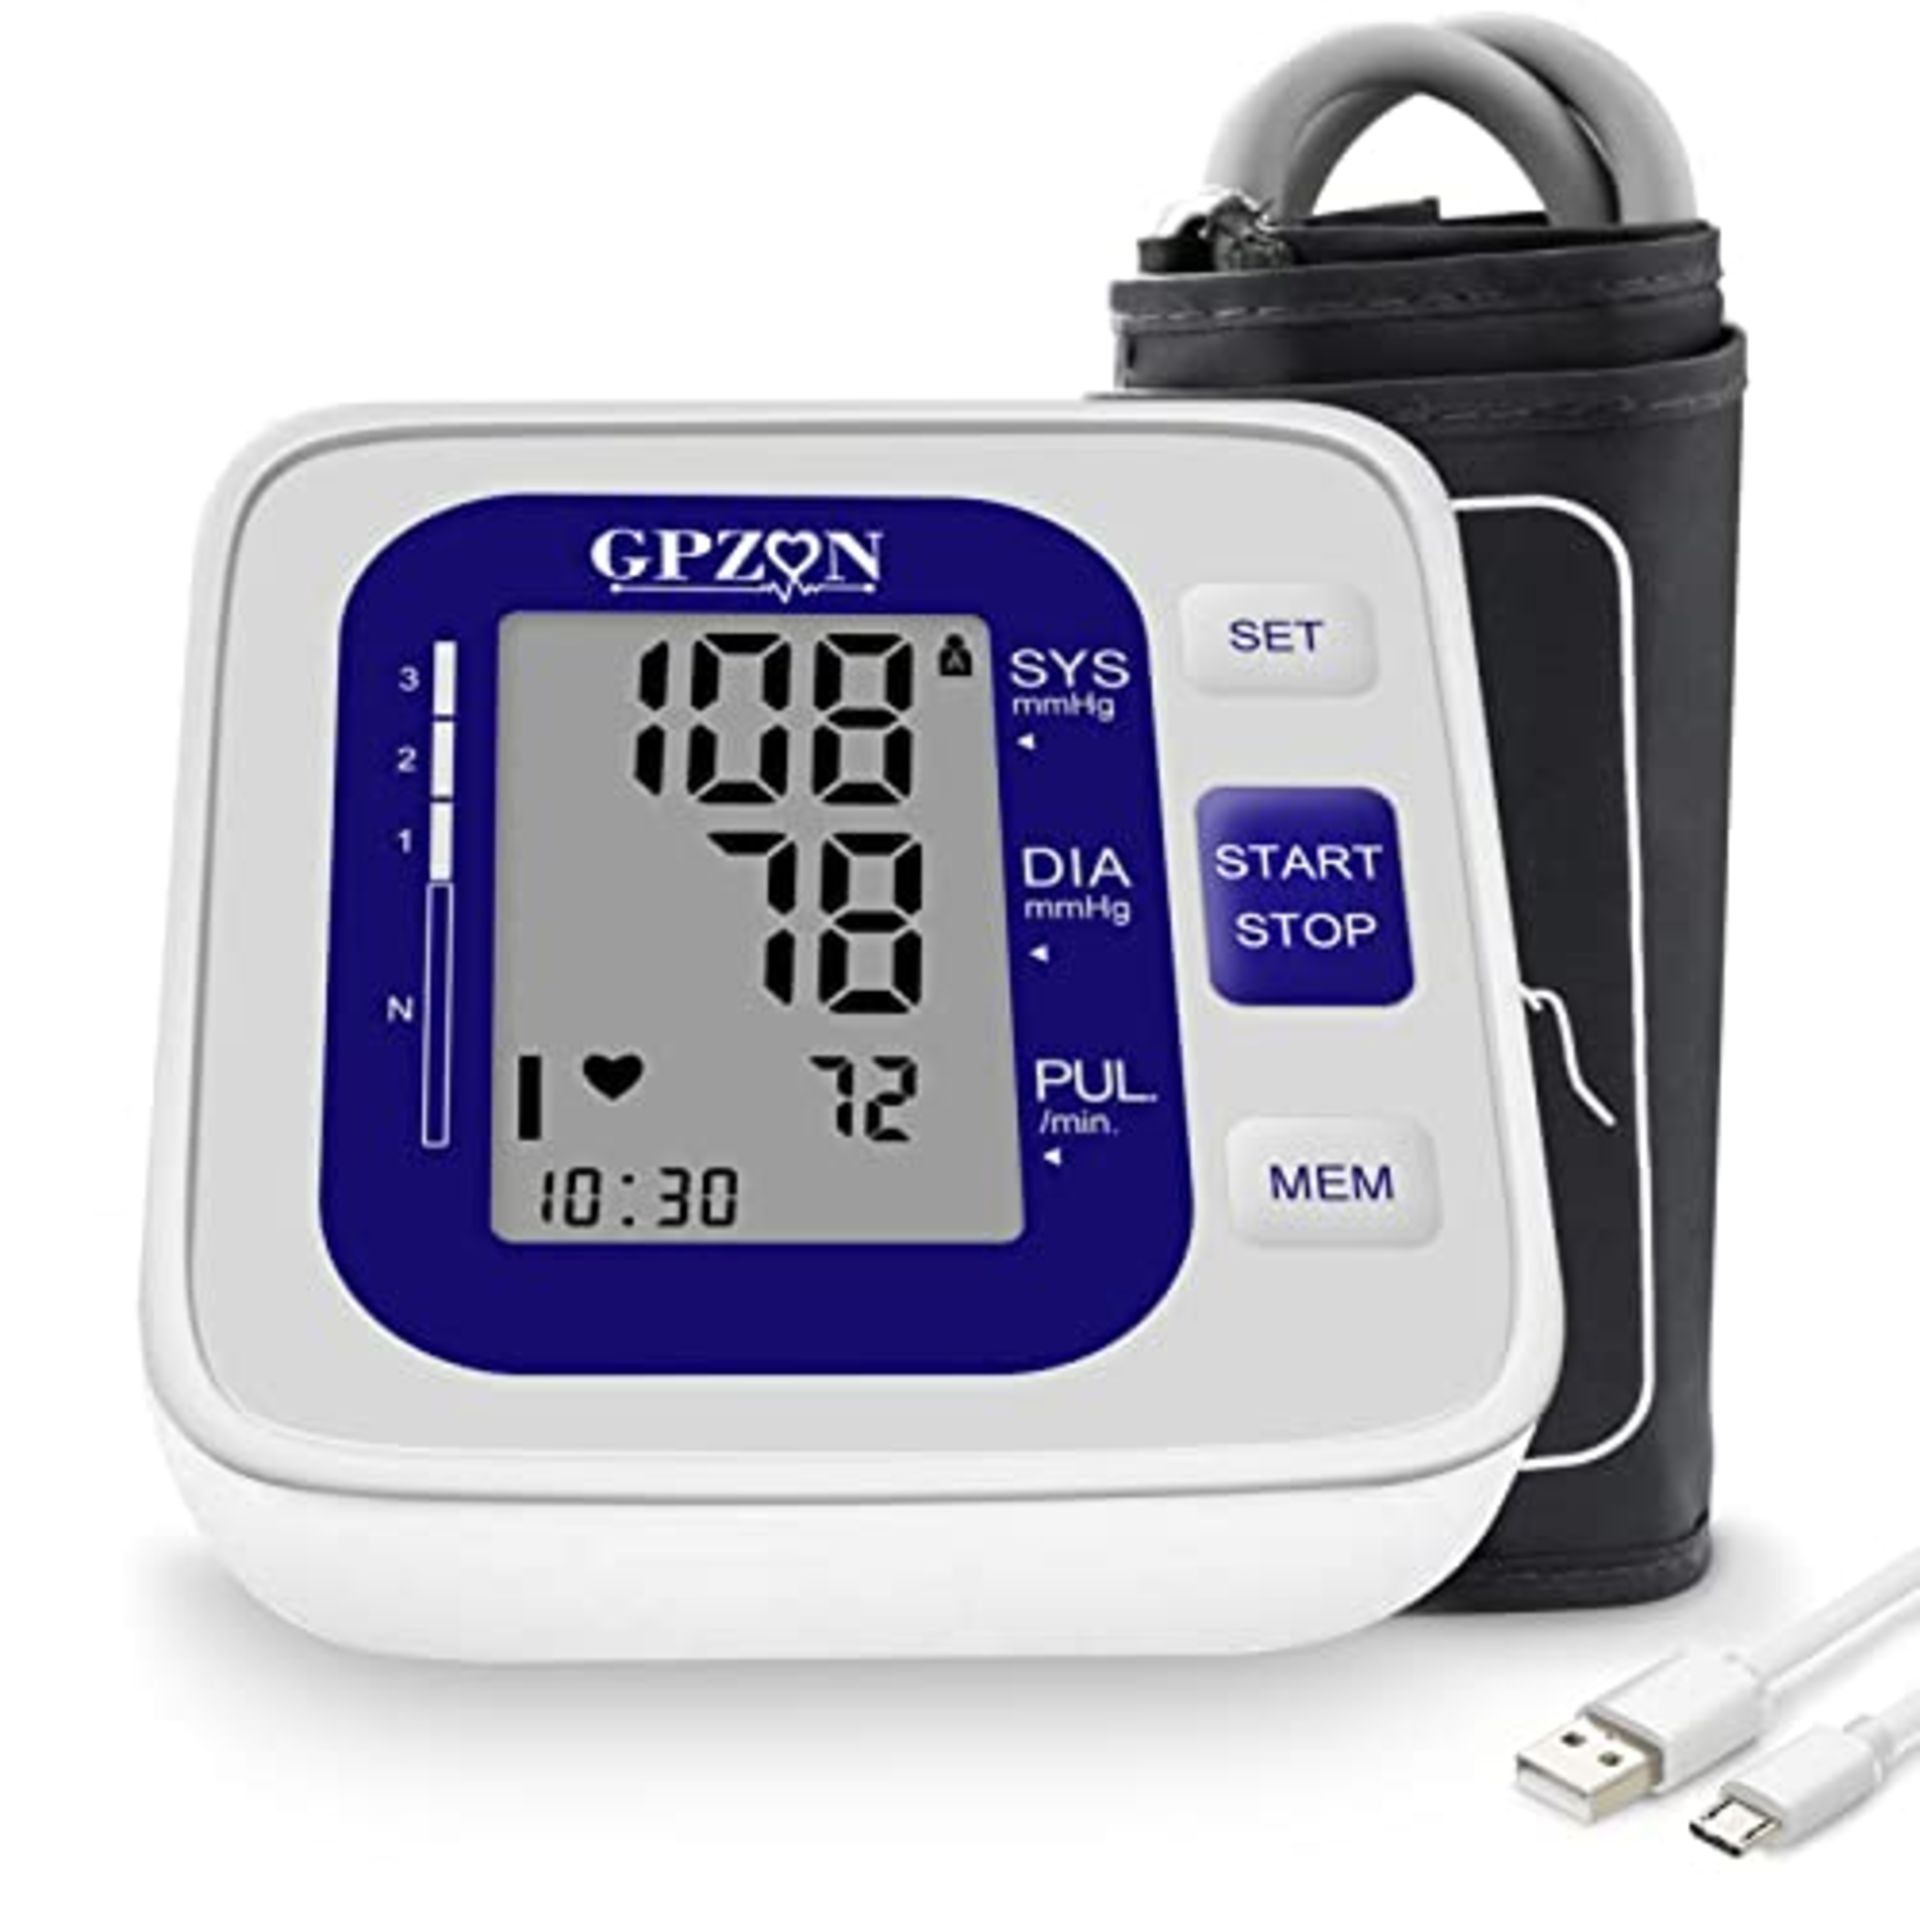 Gpzon B26 Arm Blood Pressure Monitor Cuff Machine BP Cuff, Accurate Automatic Kit for